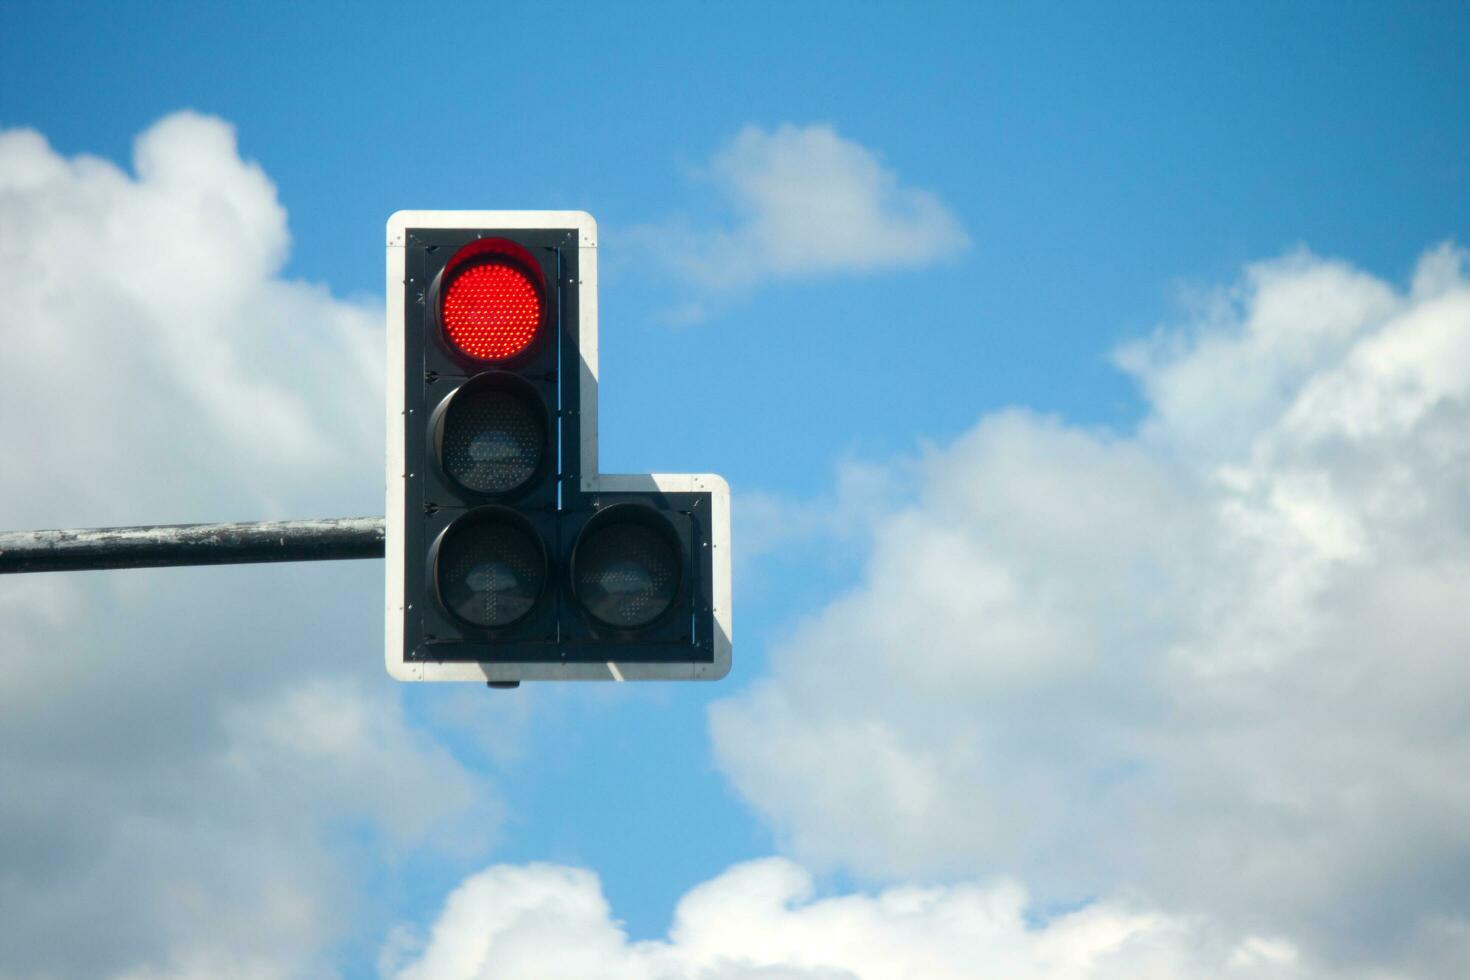 Red light traffic lights against blue sky background. photo